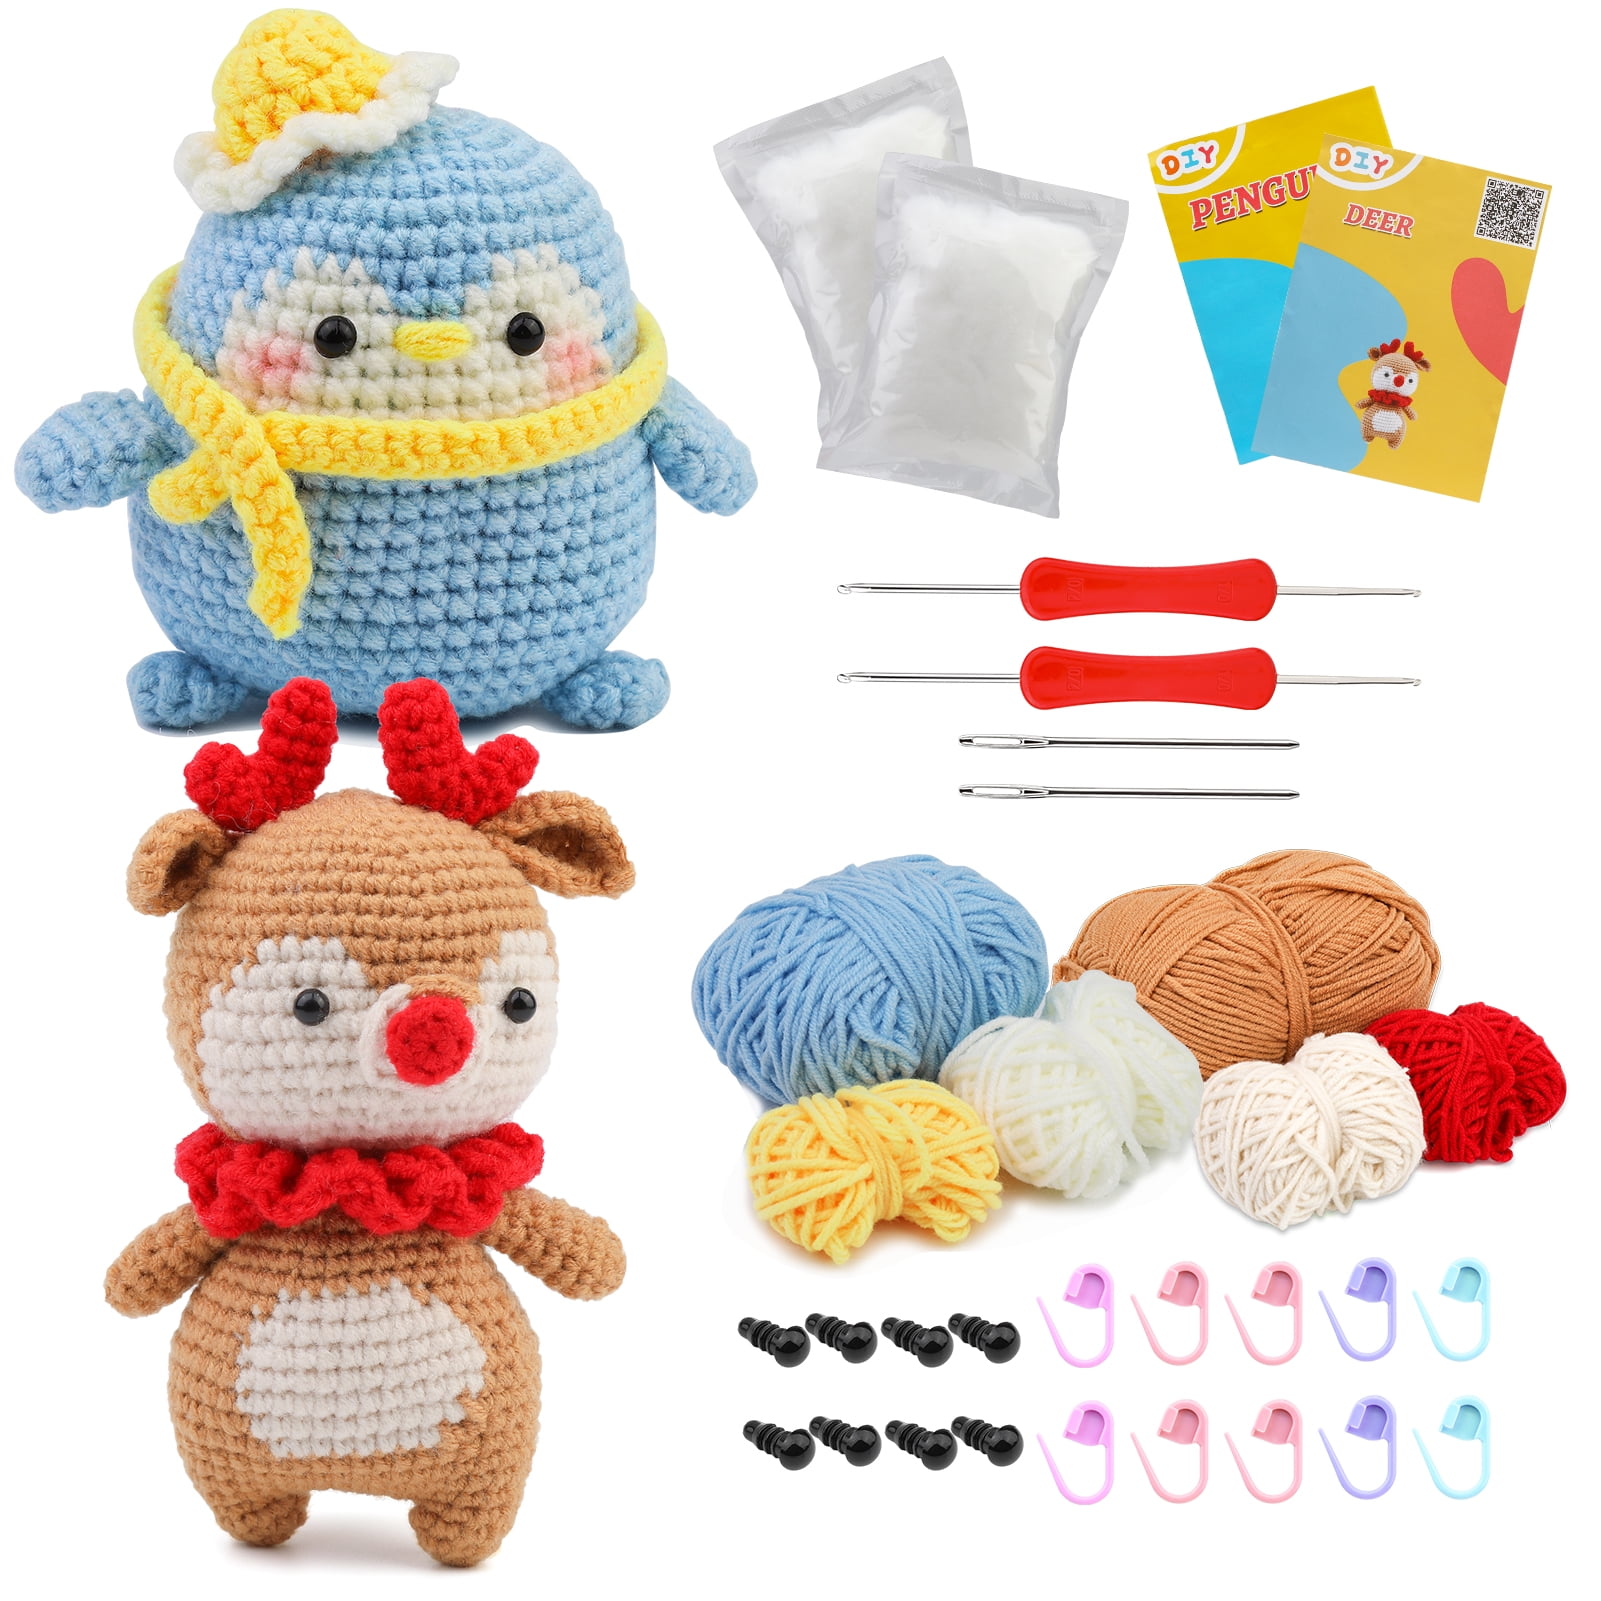 Blyrbnom Crochet Kit Beginners for Adults,Crochet Animals Kits